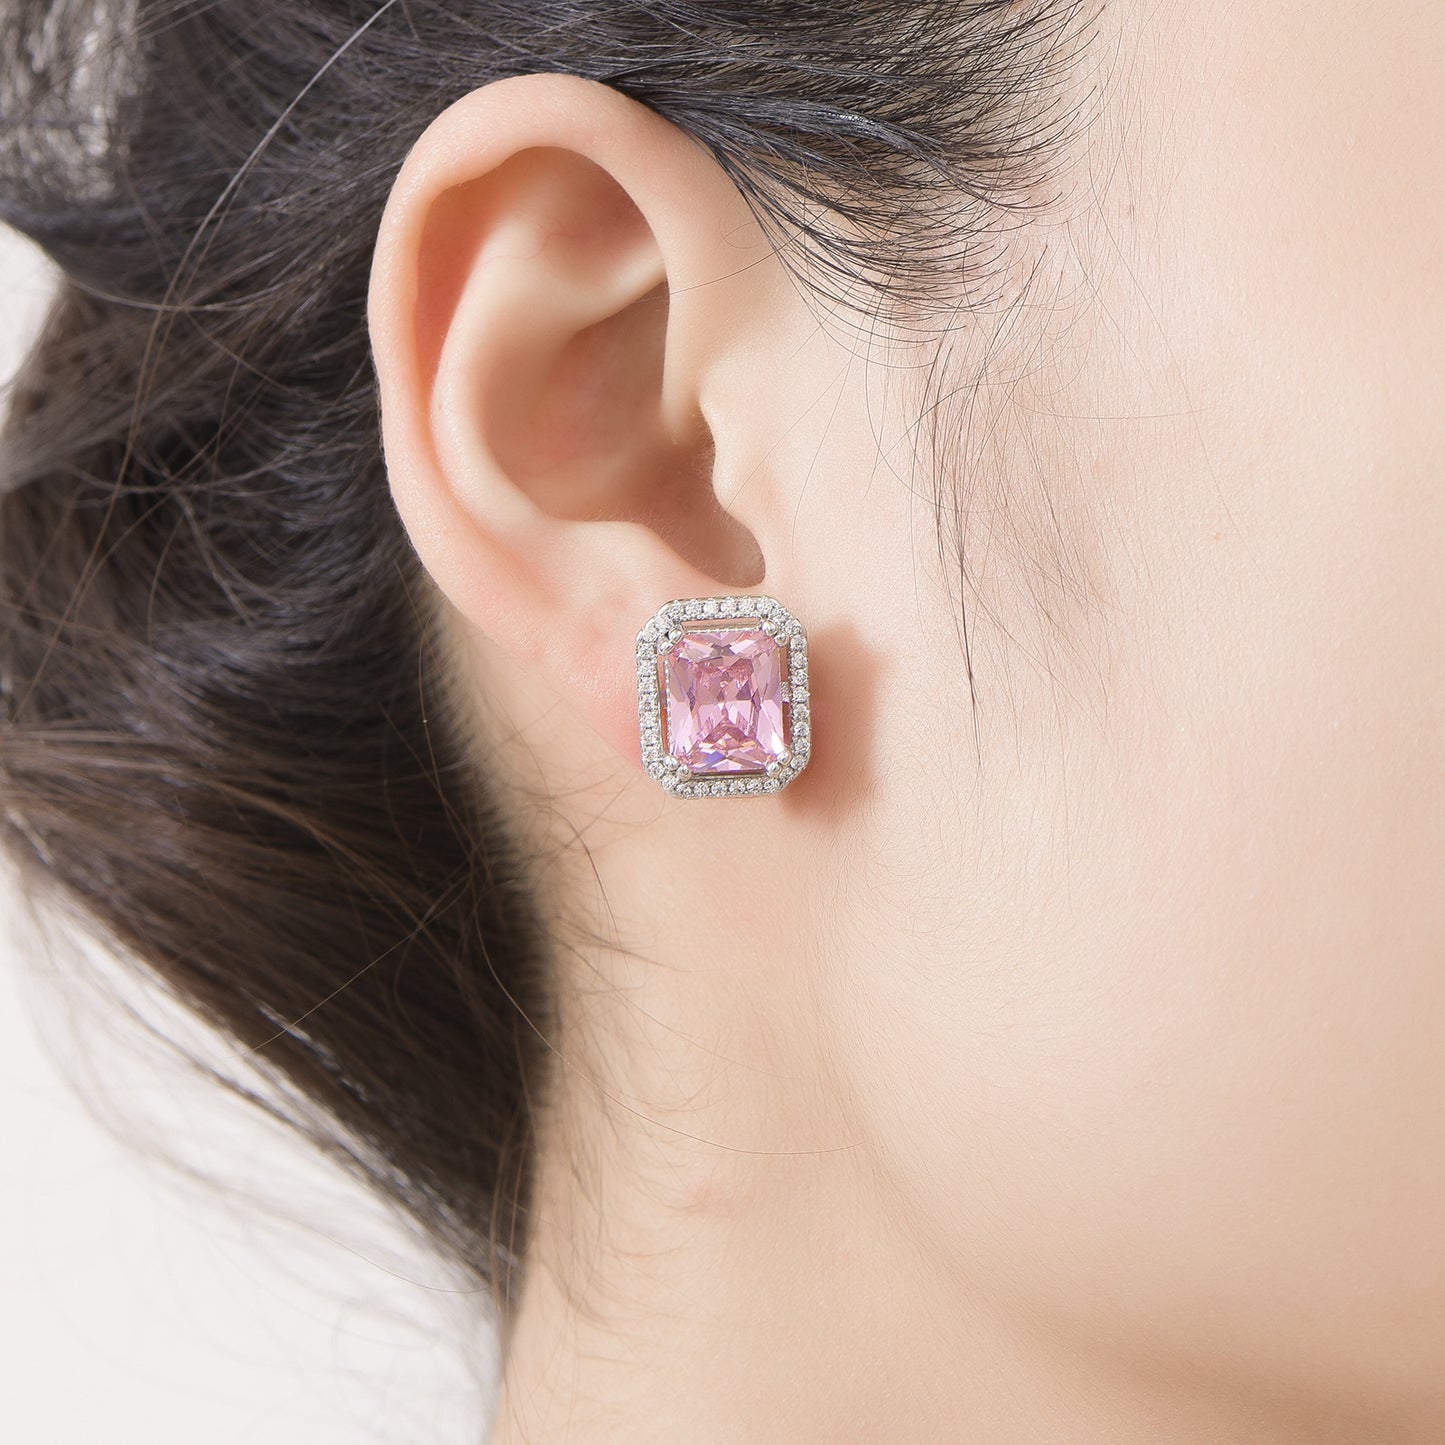 Vivid Pink Color, VVS1 moissanite Diamond earring